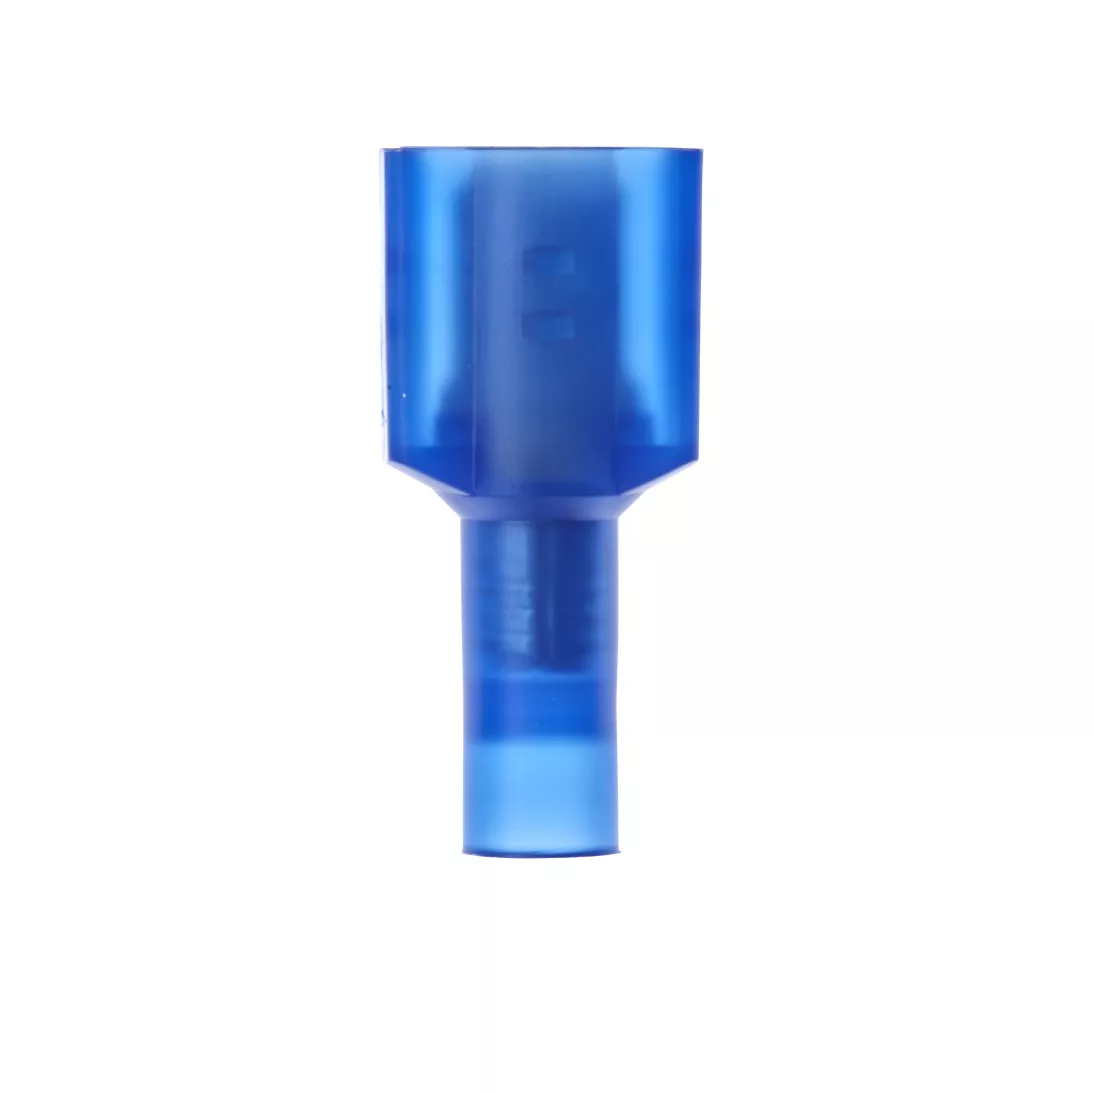 3M™ Scotchlok™ Male Disconnect Nylon Insulated, 50/bottle,
MNU14-250DMIX, 10 Packs/Case